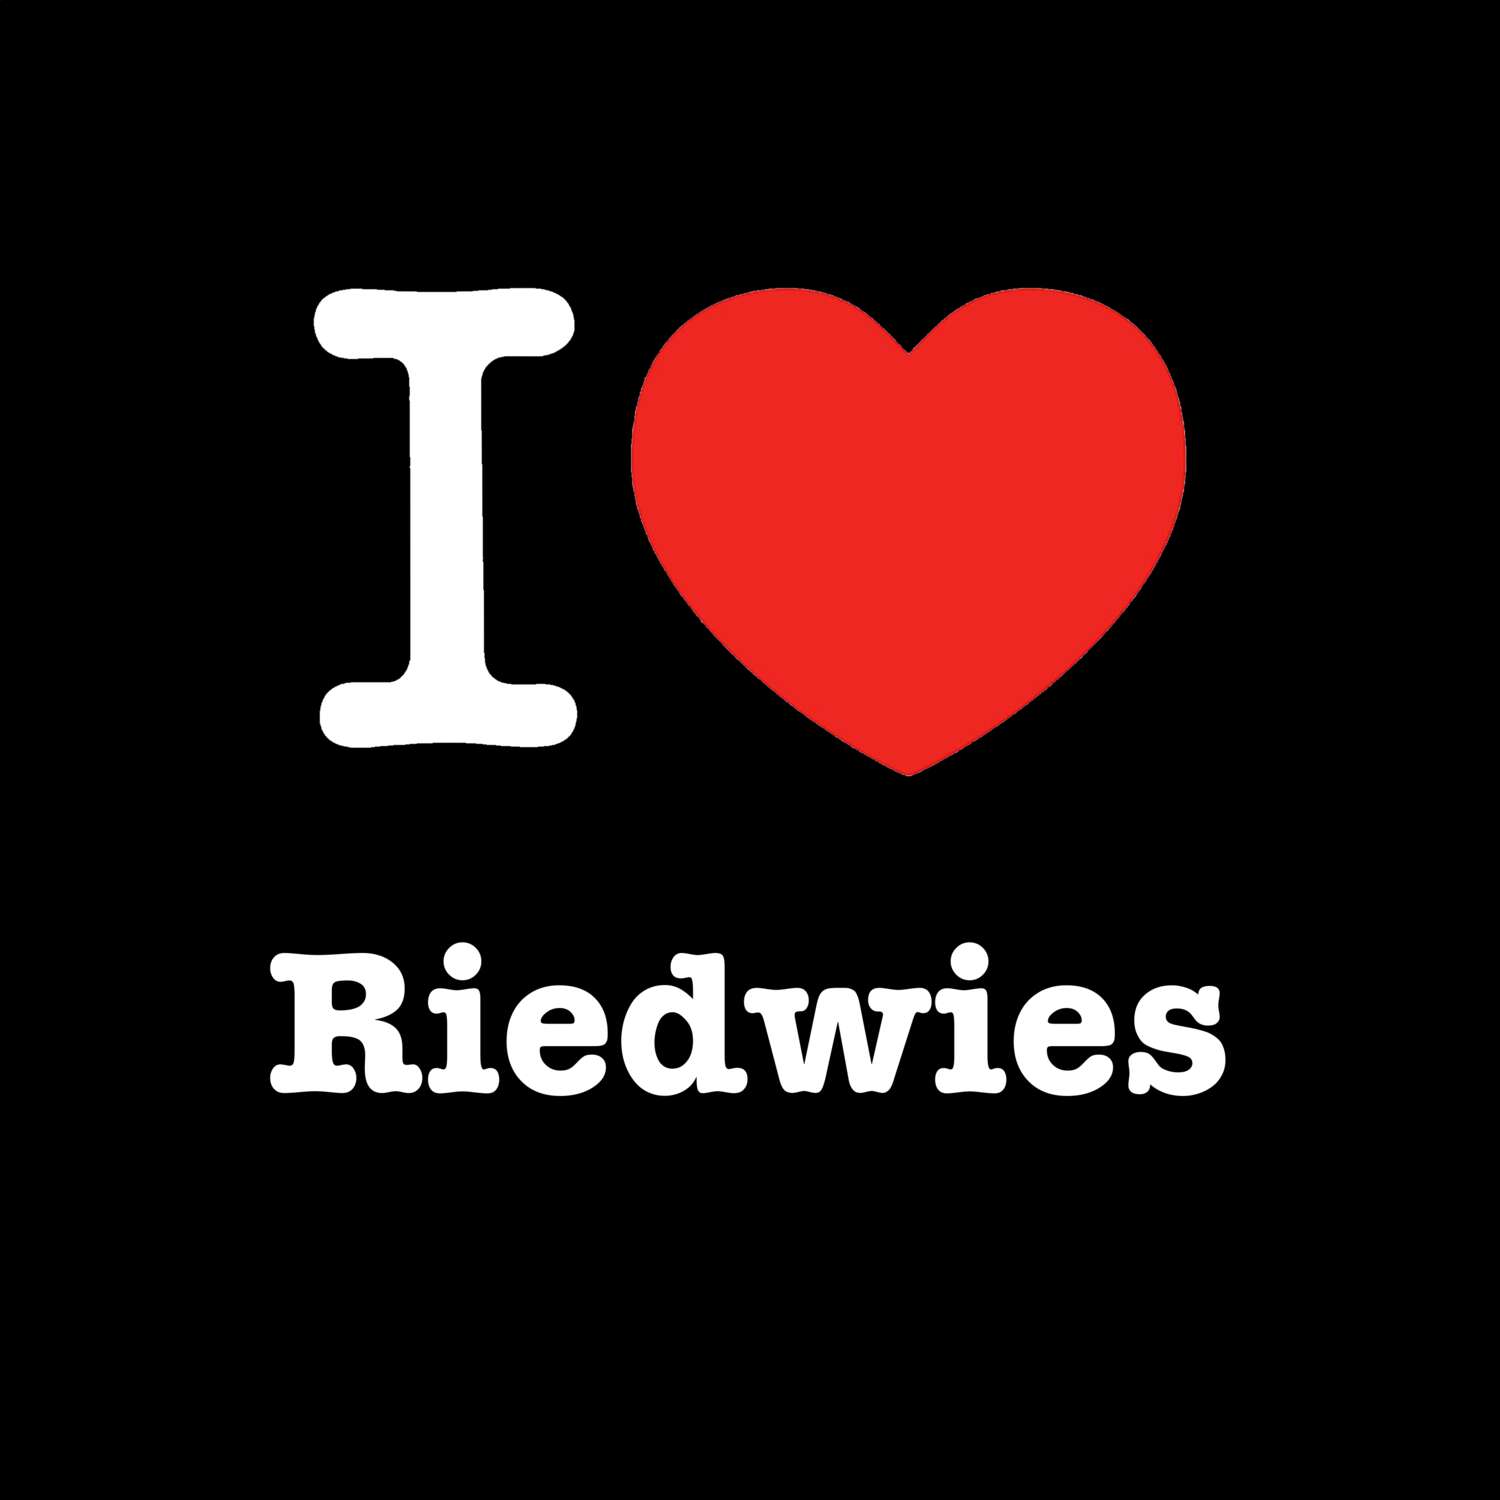 Riedwies T-Shirt »I love«